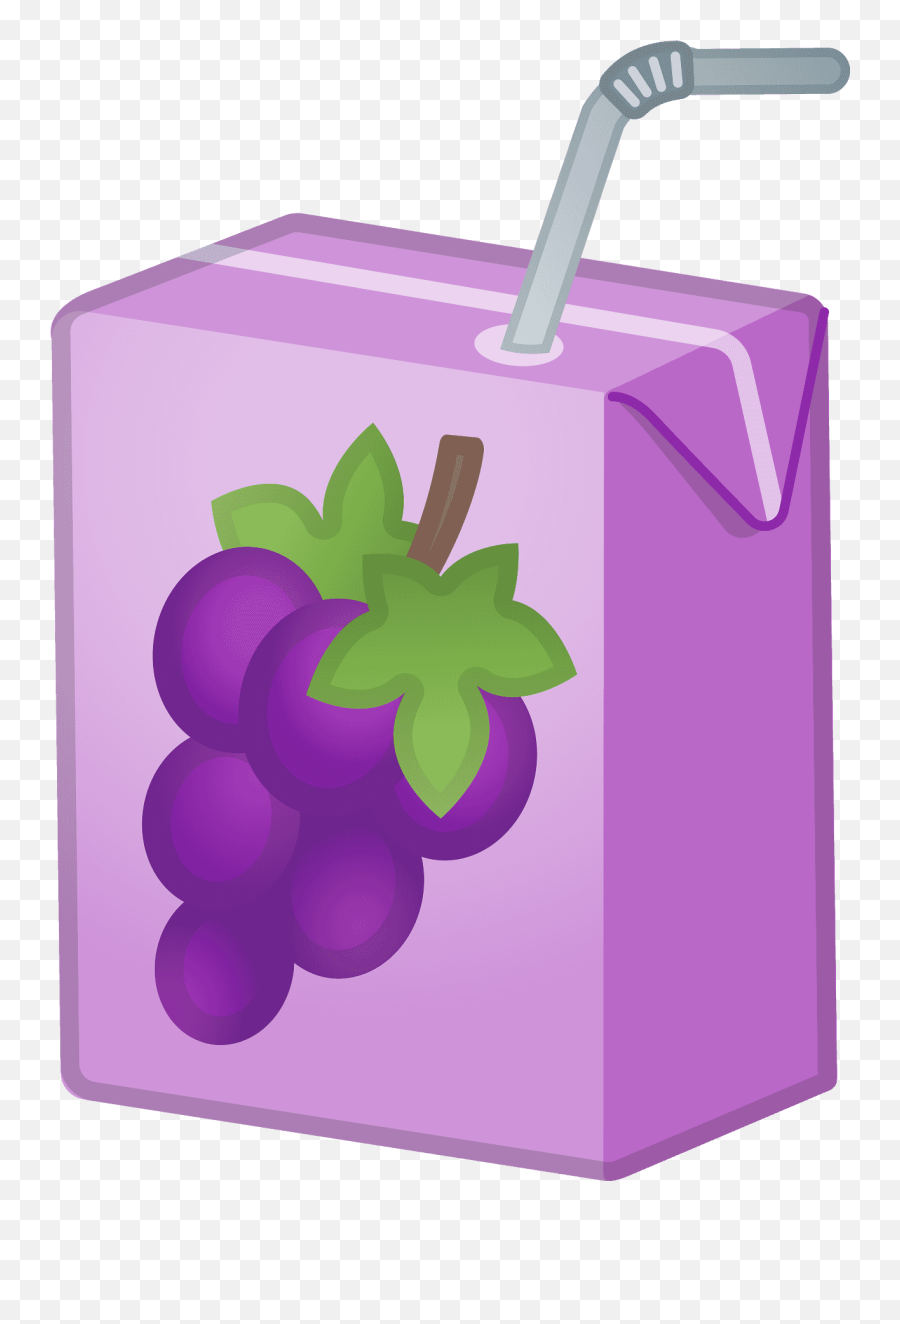 The Best 16 Grape Emoji Android - Juice Box Emoji,Commuist Emojis